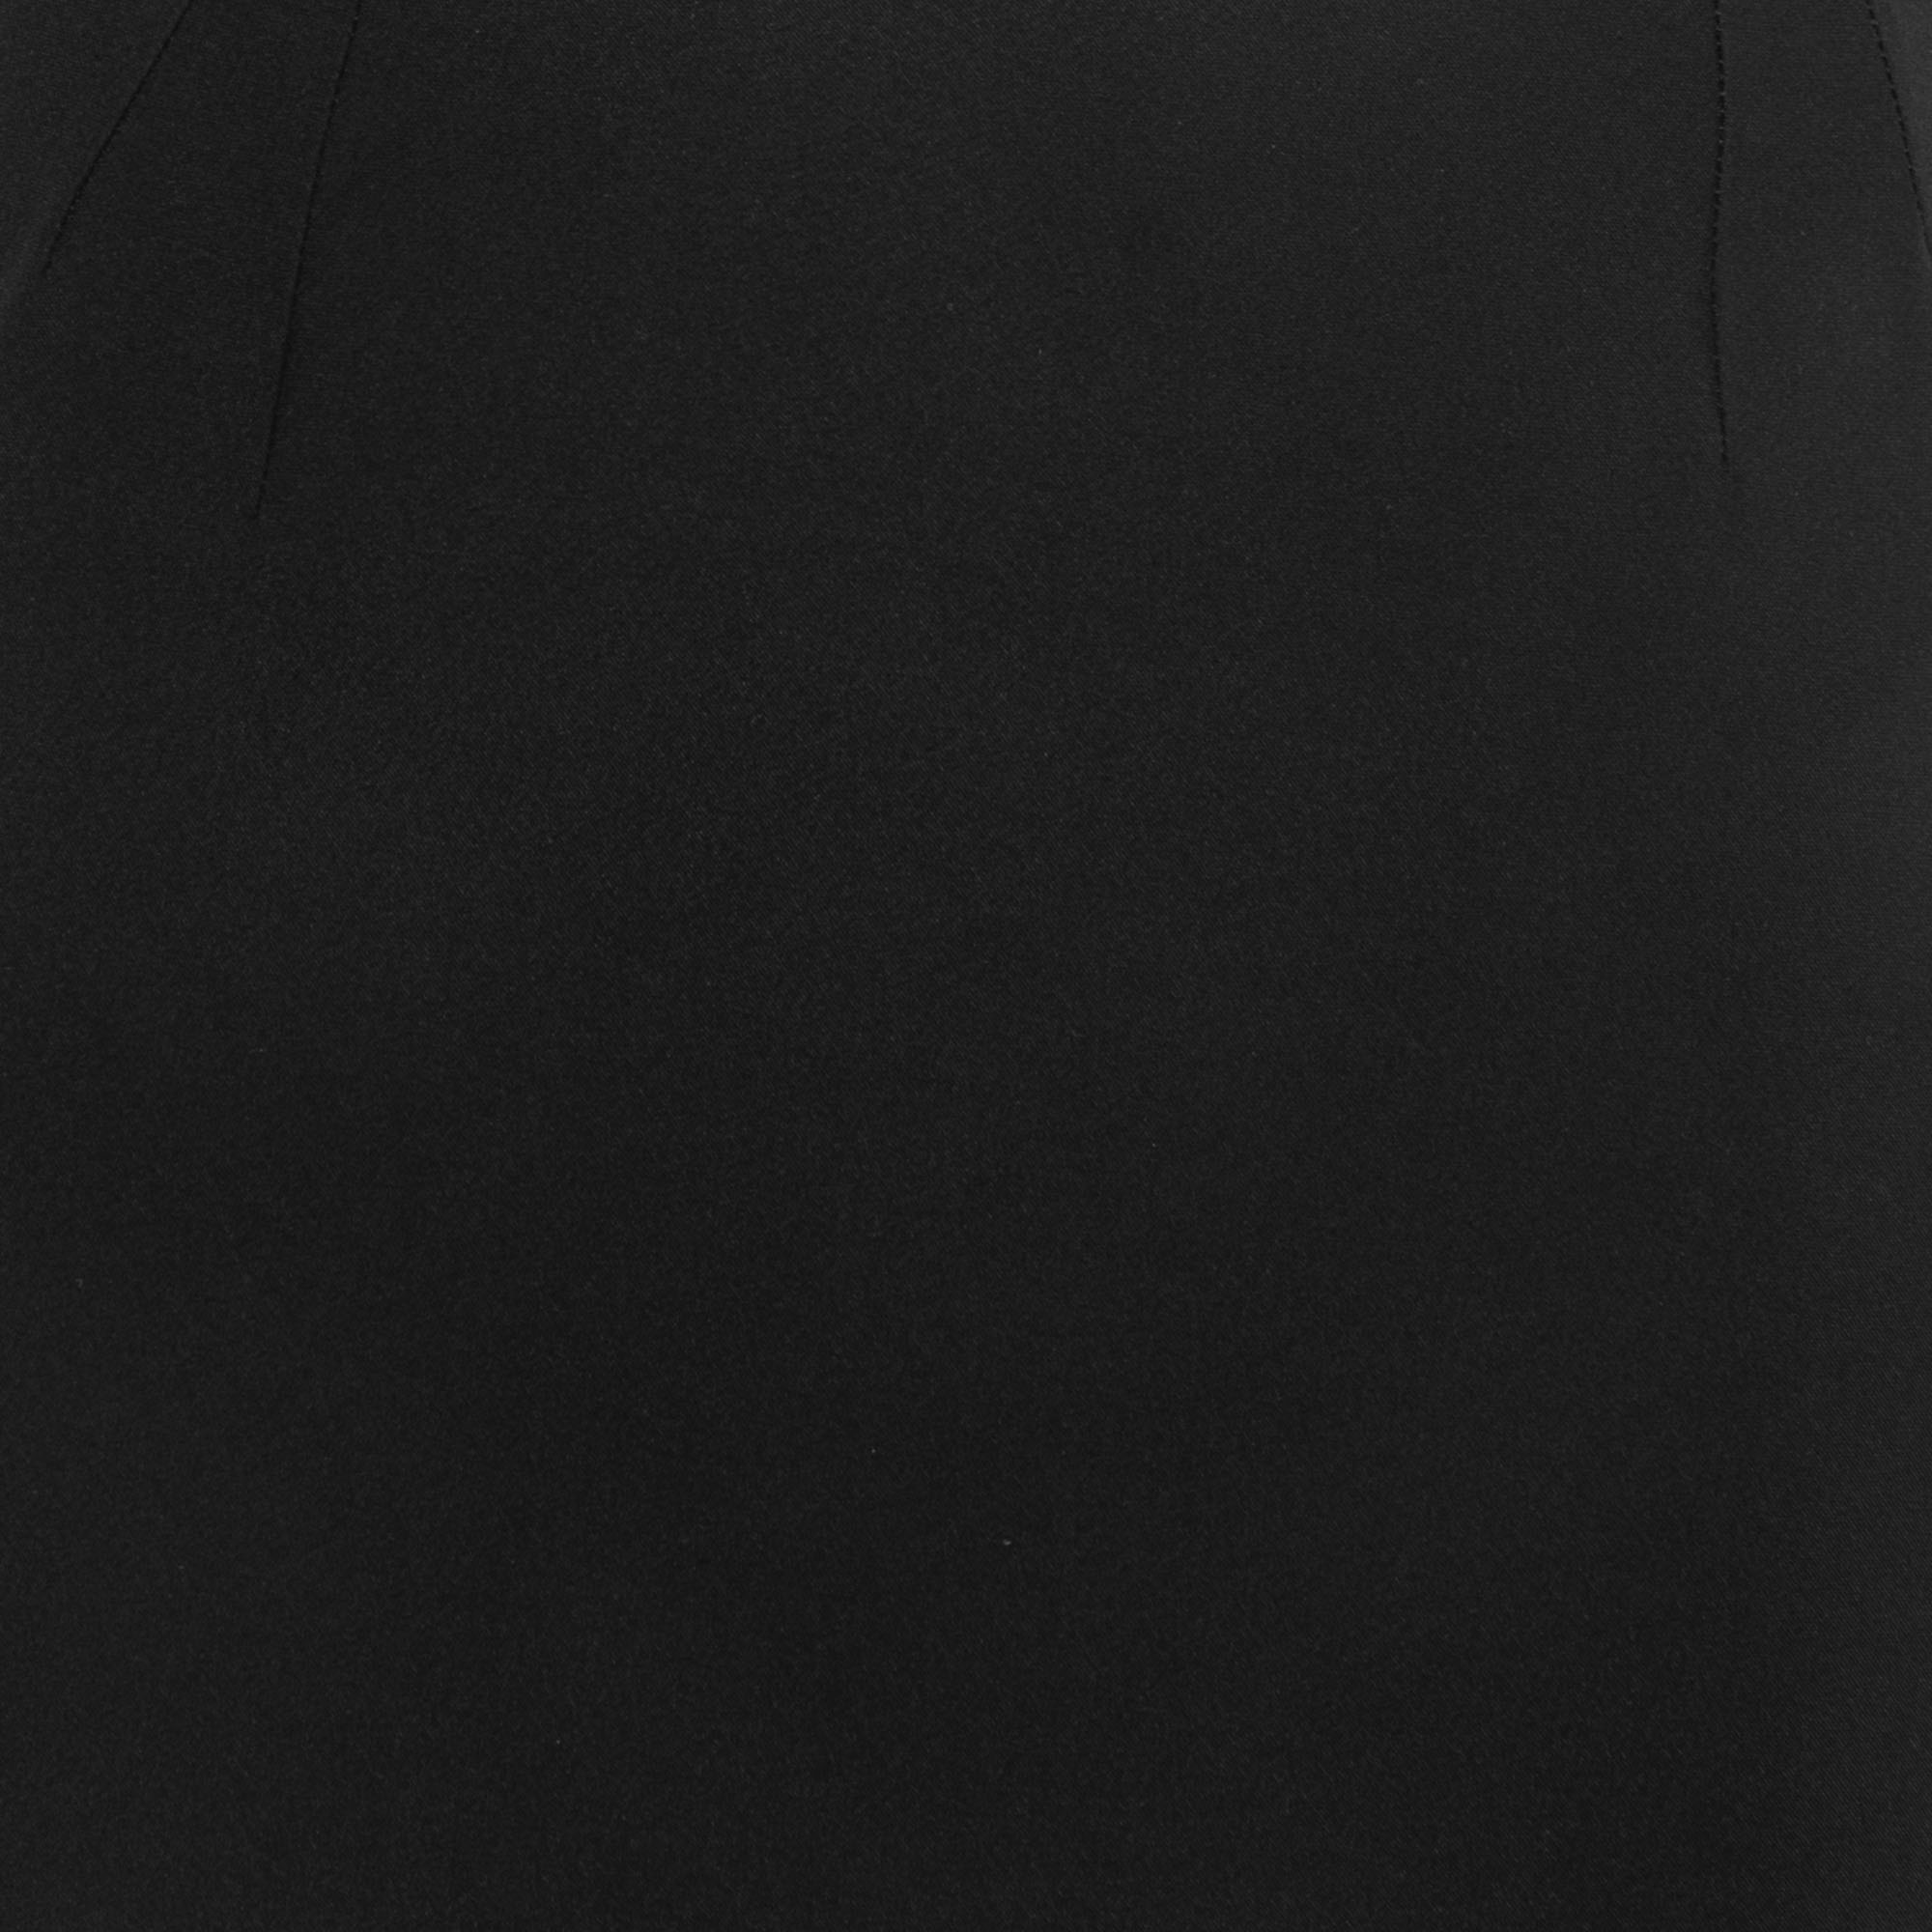 Armani Collezioni Black Crepe Knee Length Skirt S